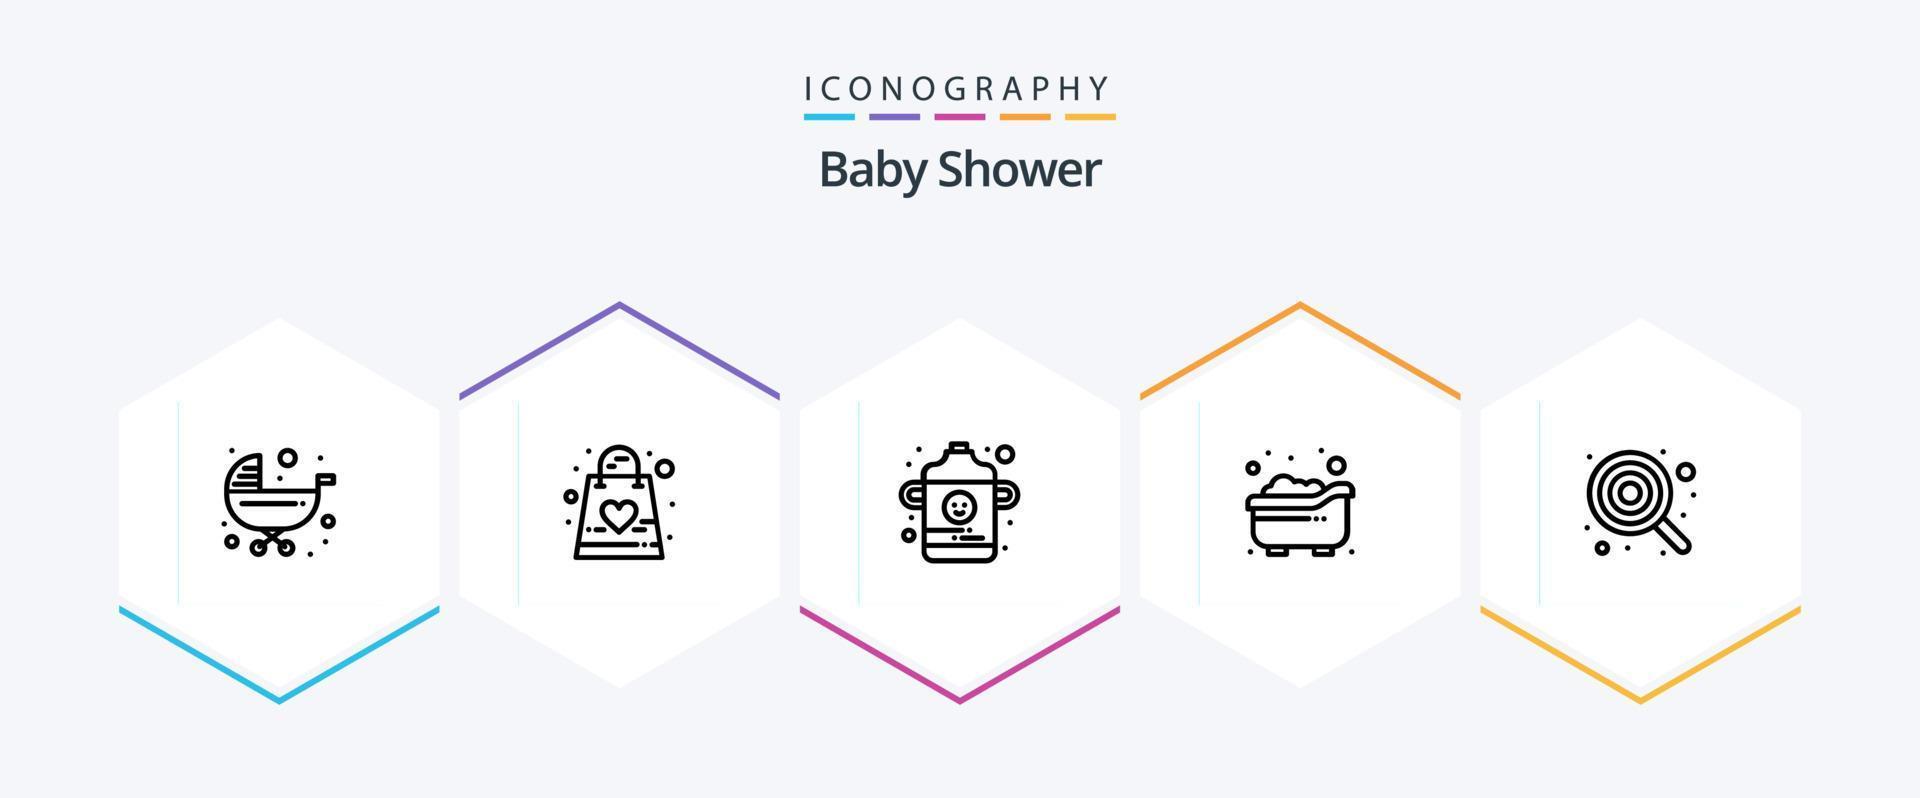 bebis dusch 25 linje ikon packa Inklusive bebis. barn. unge. bad. spädbarn vektor